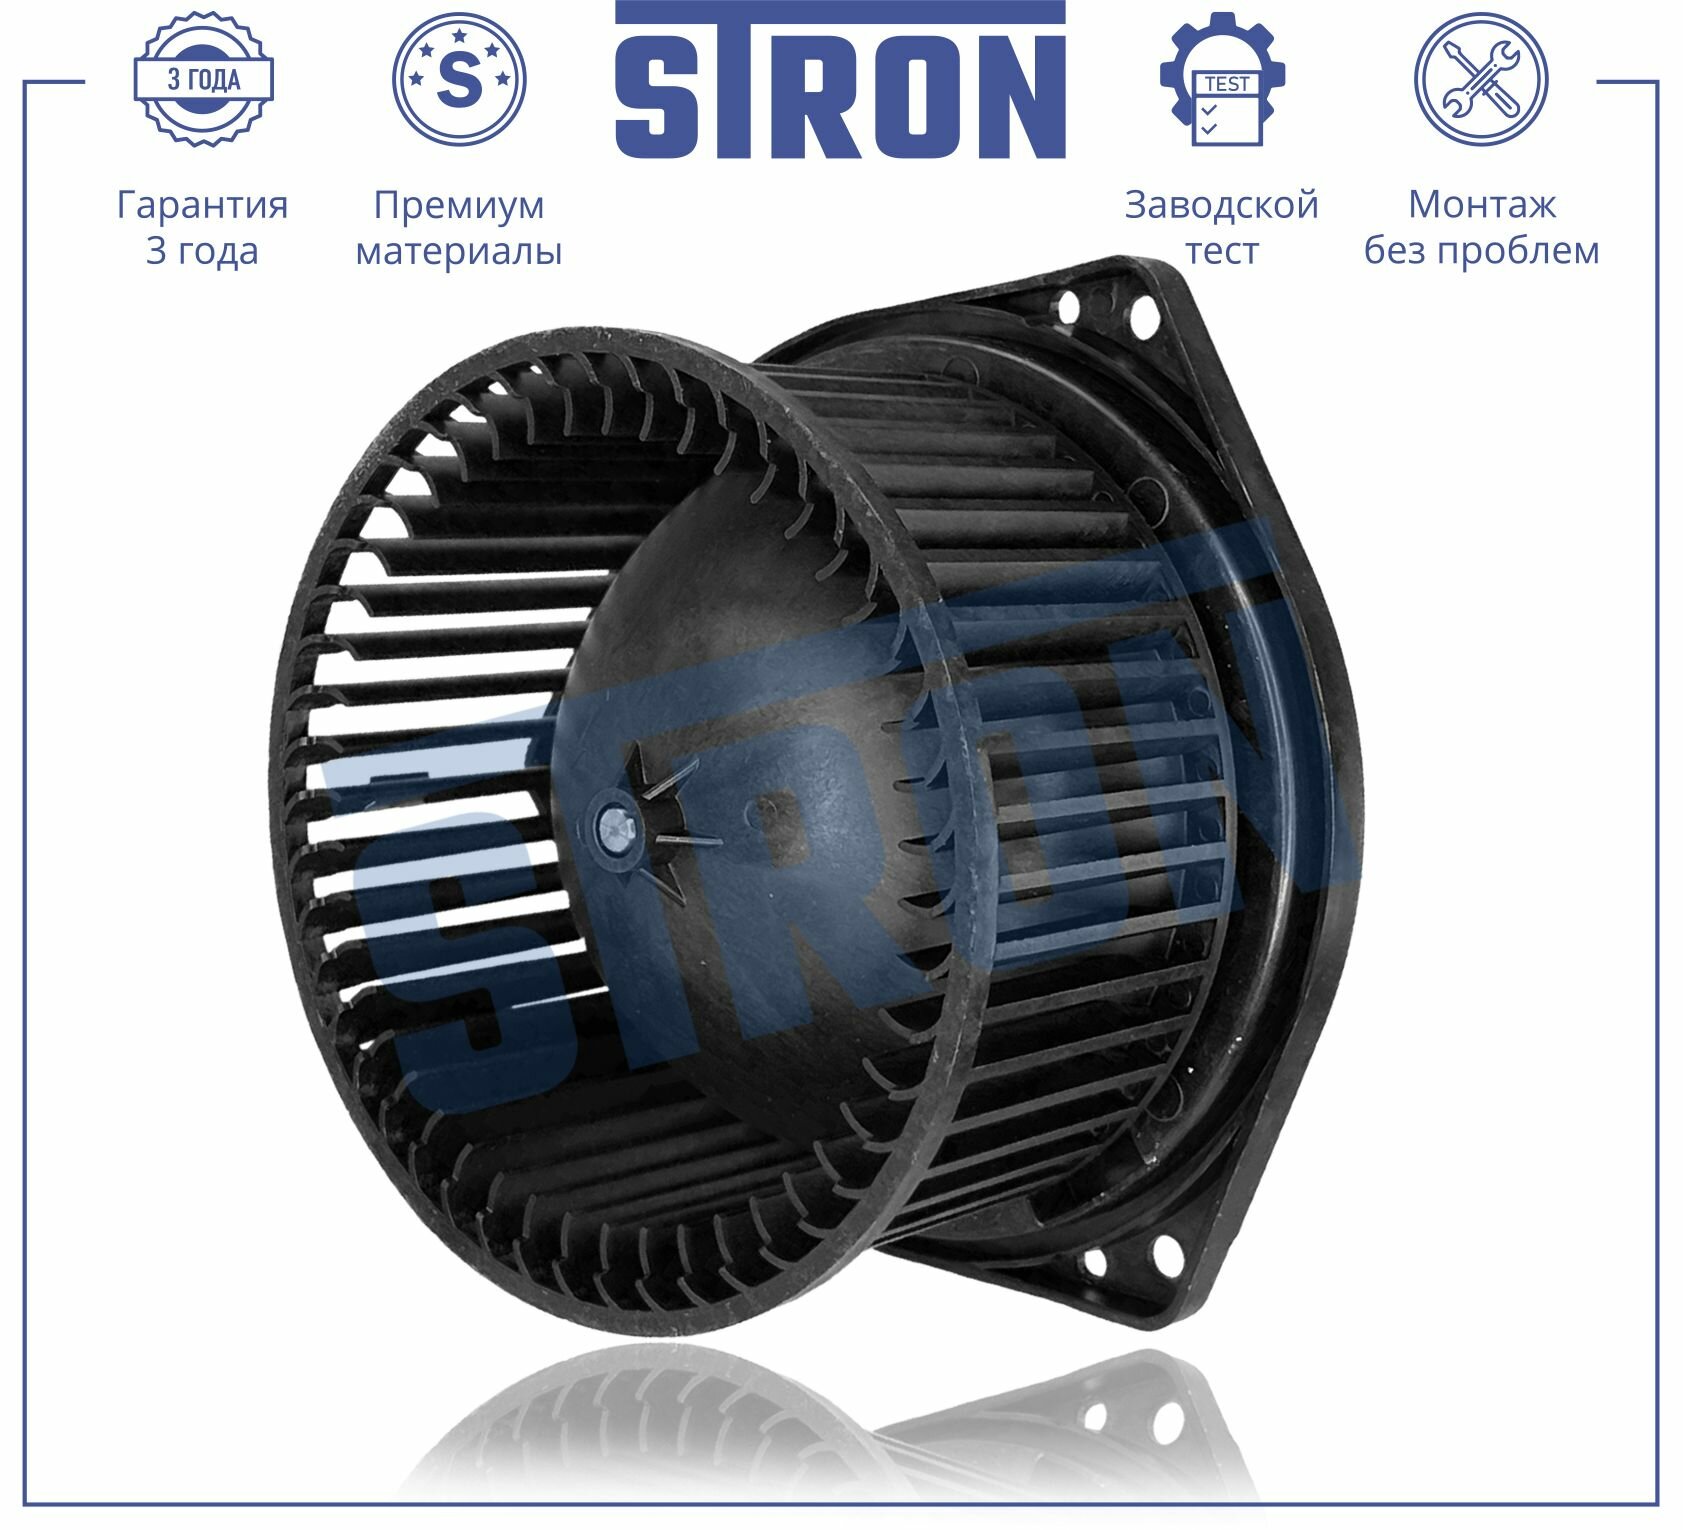 Вентилятор отопителя салона STRON для автомобиля SUBARU